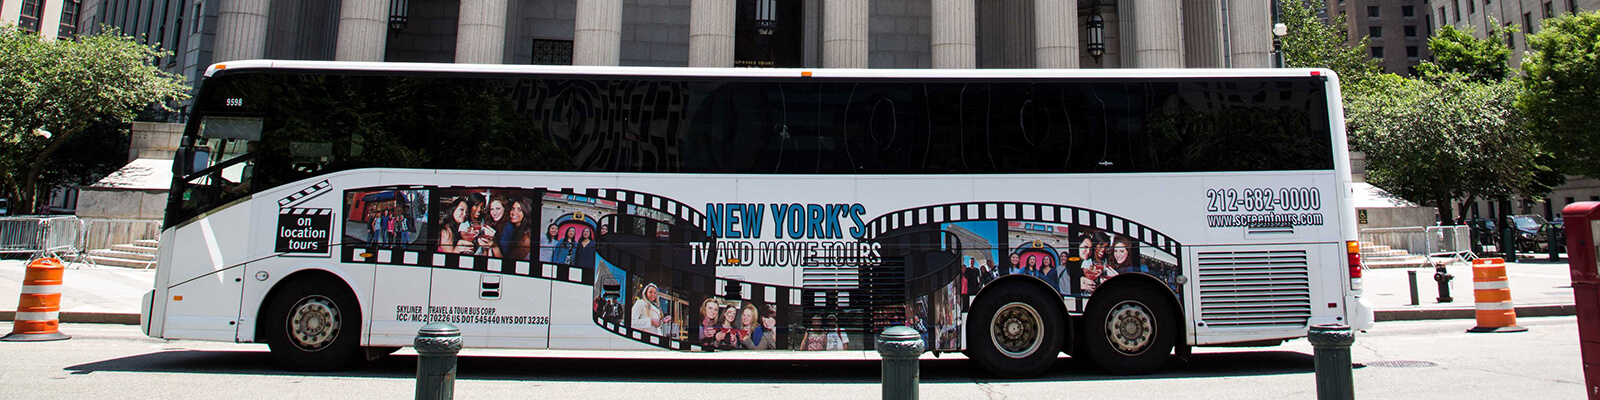 NYC TV Movie Tour Coupons